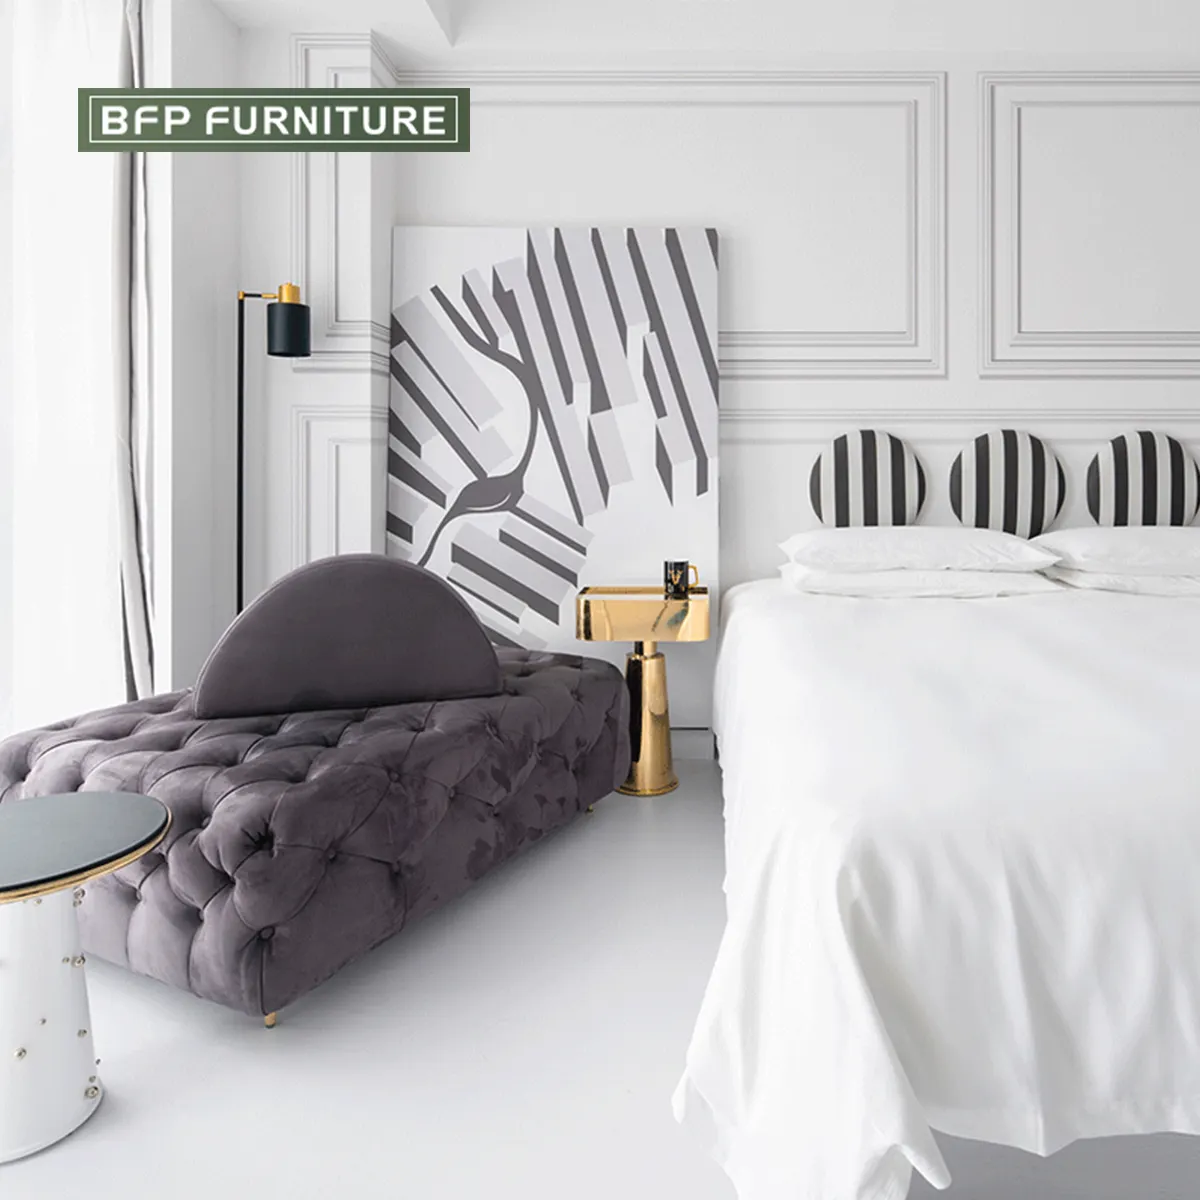 BFP Heim kommerzielles Projekt Resort Villa Hotel Möbel moderner Stil Schlafzimmer Suite